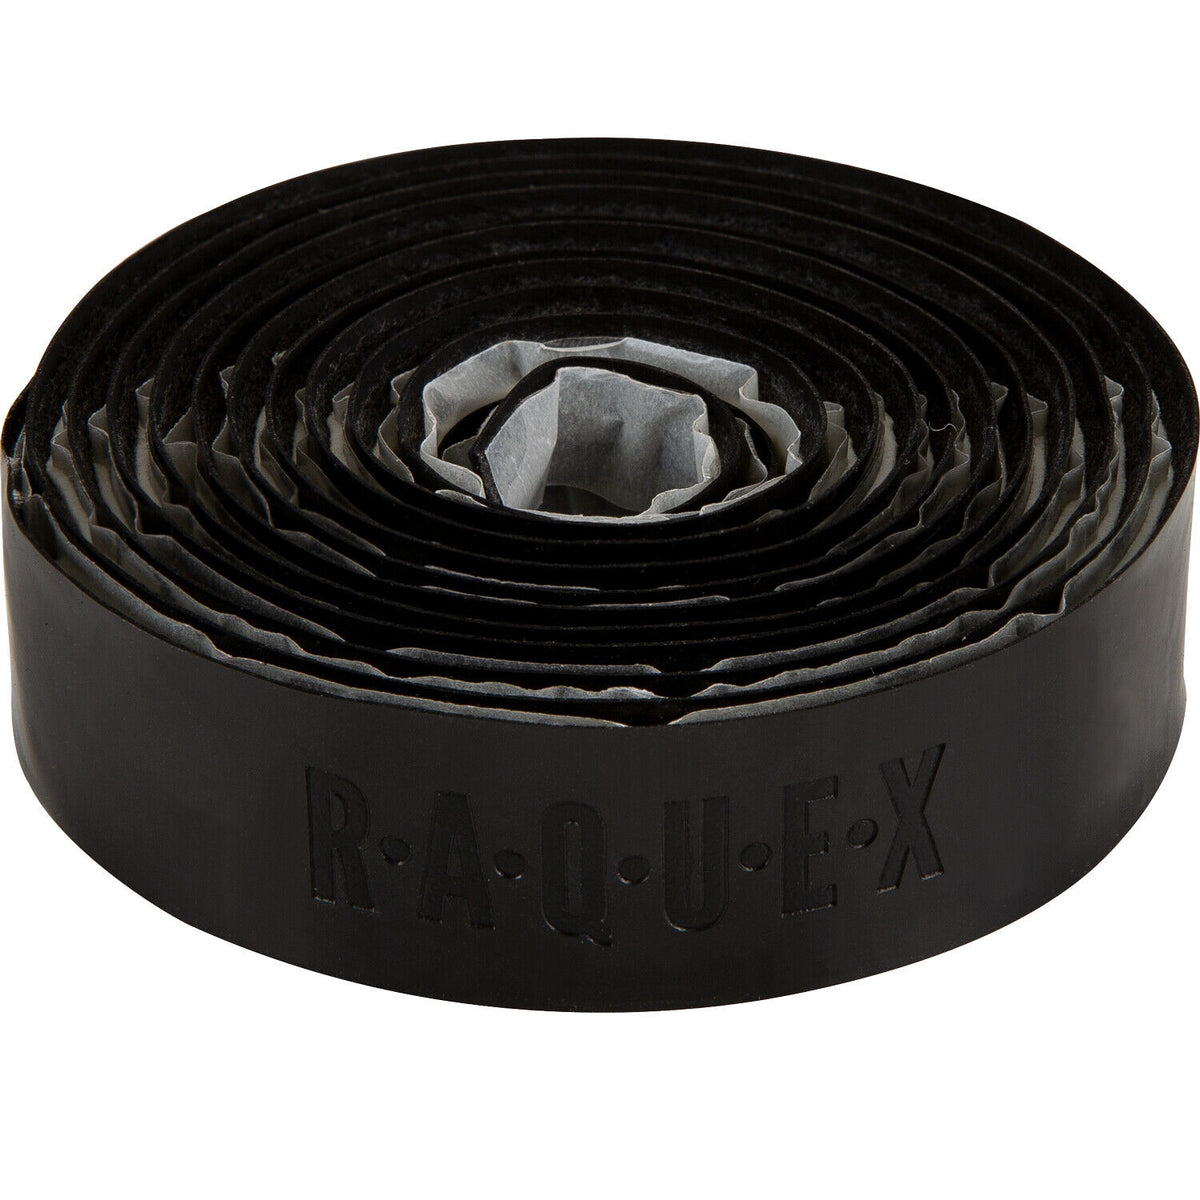 Hockey Stick Grip Tape - Raquex Cushion PU Hockey Stick Grip: Super Grippy, Soft & Absorbent. Self-adhesive backing. Extra long length